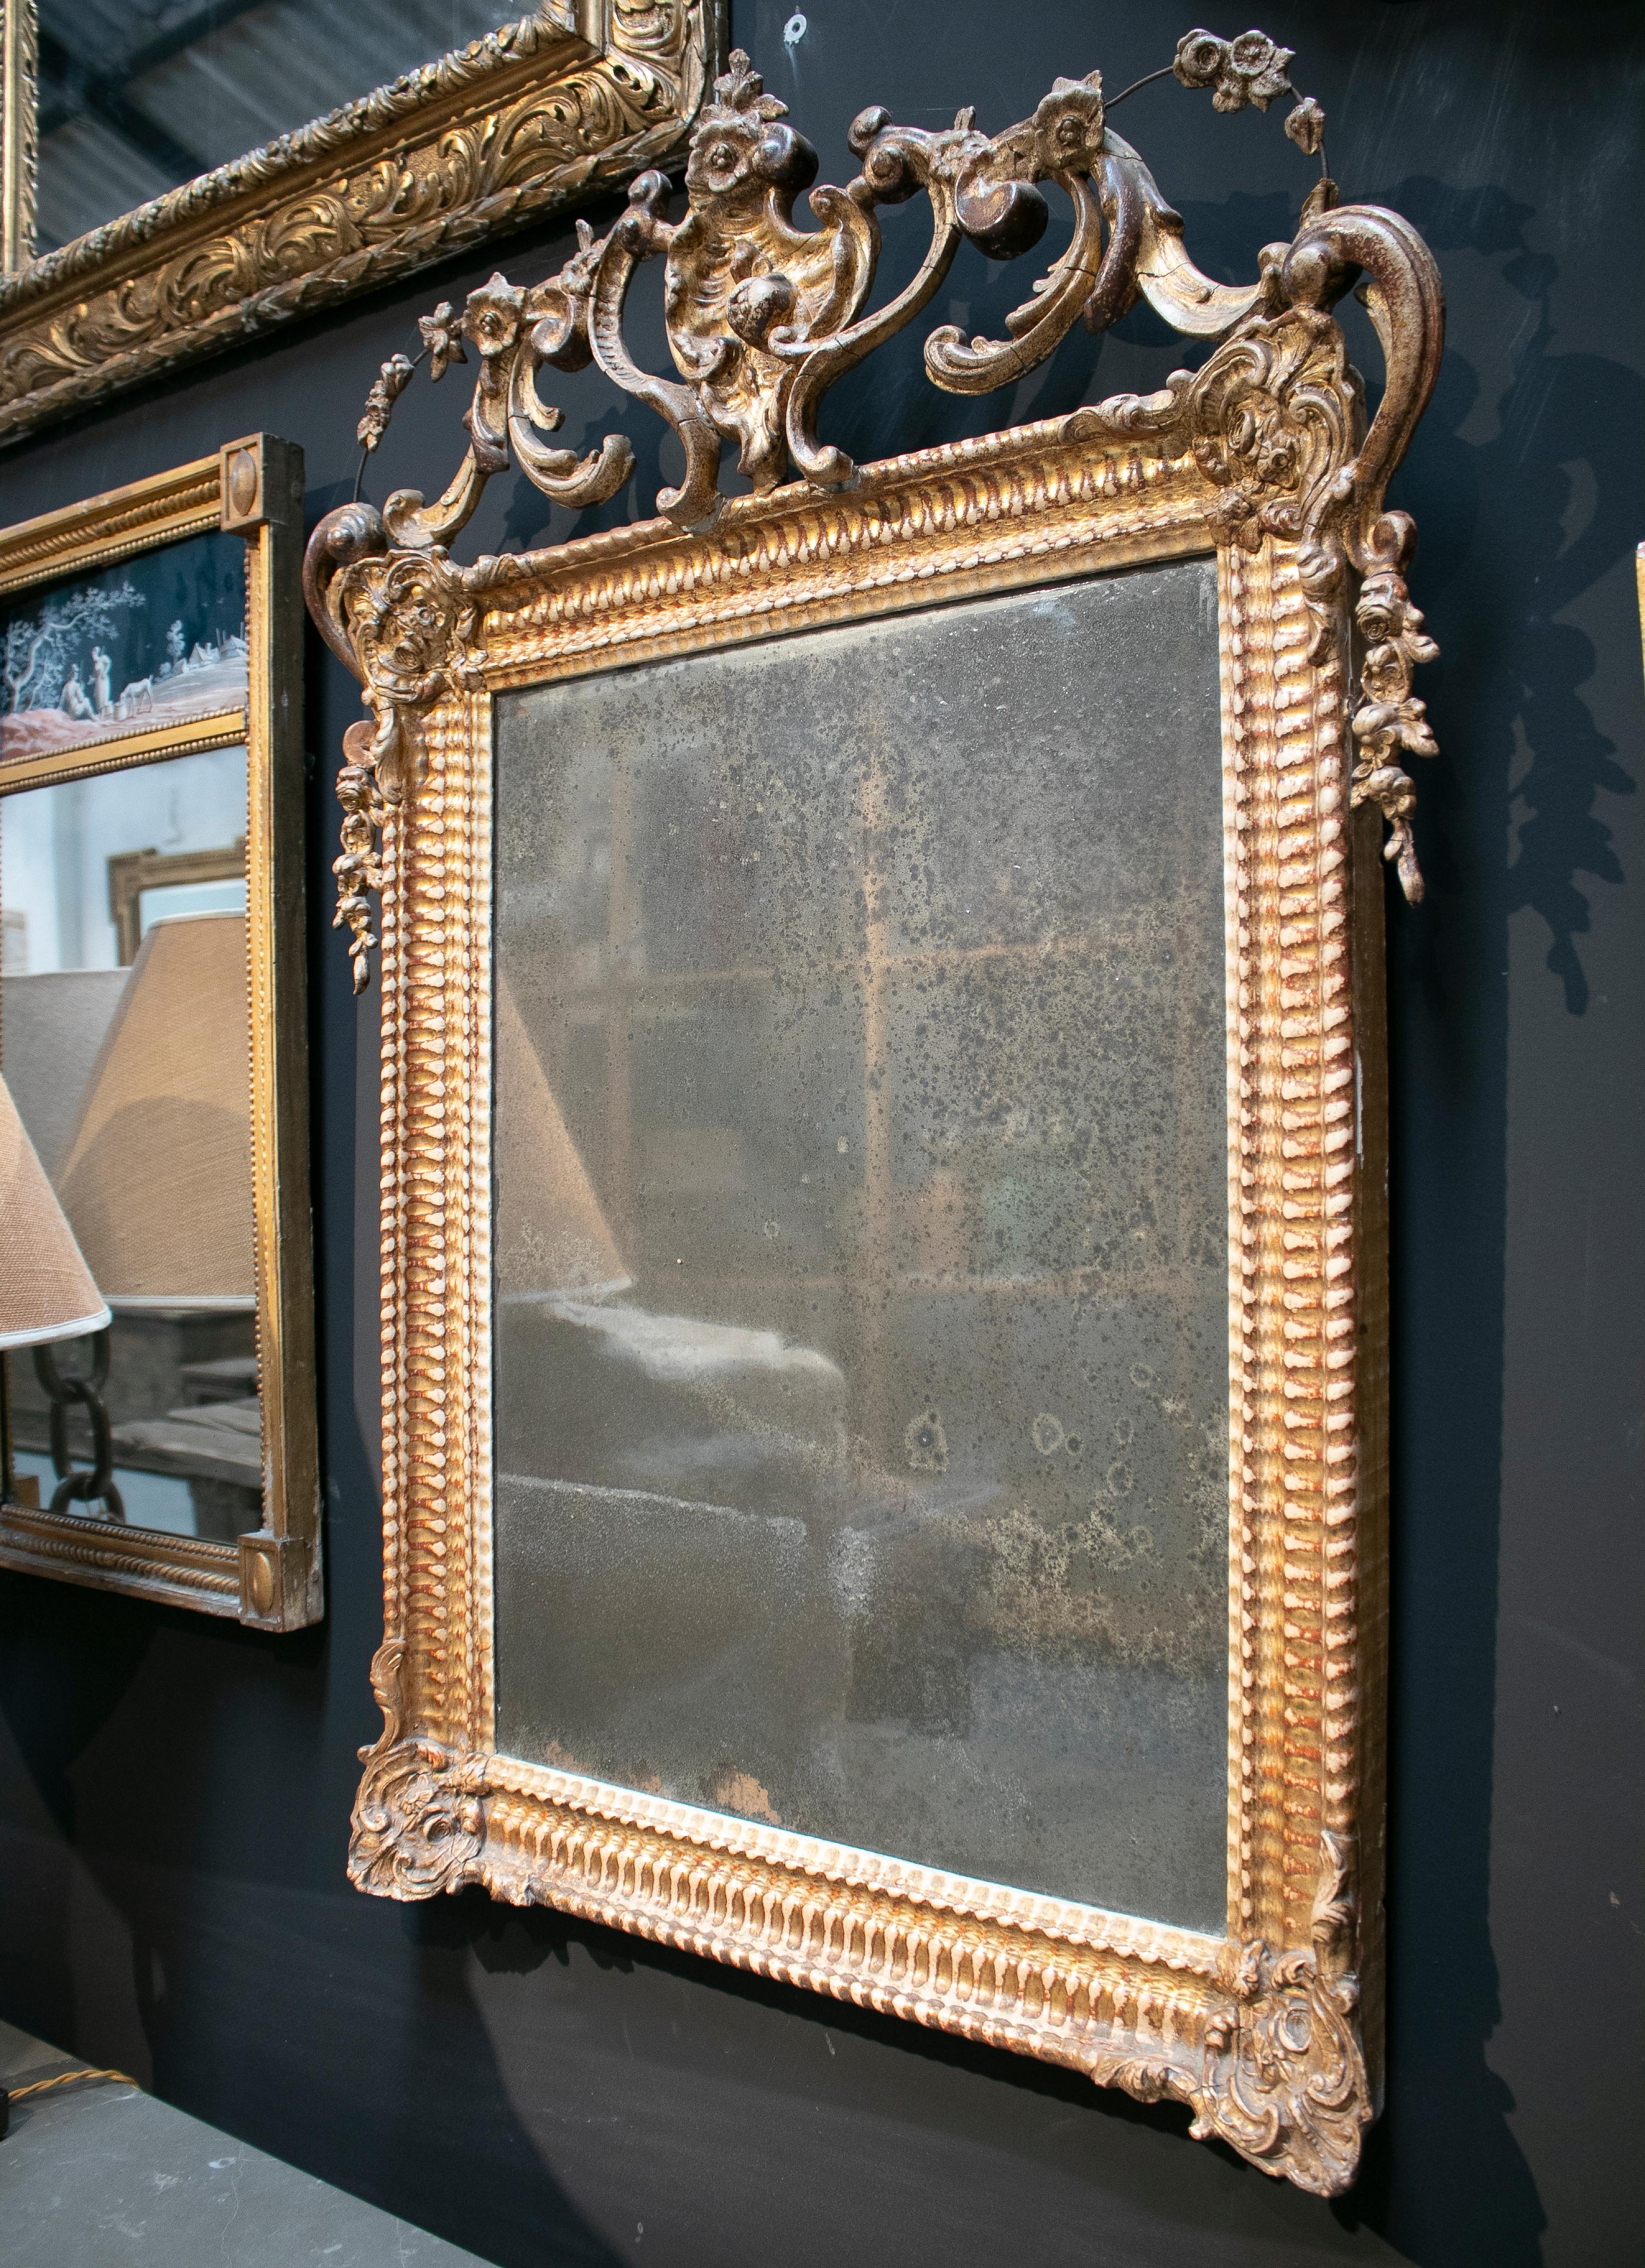 19th century Spanish Isabellin rococo golden mirror.